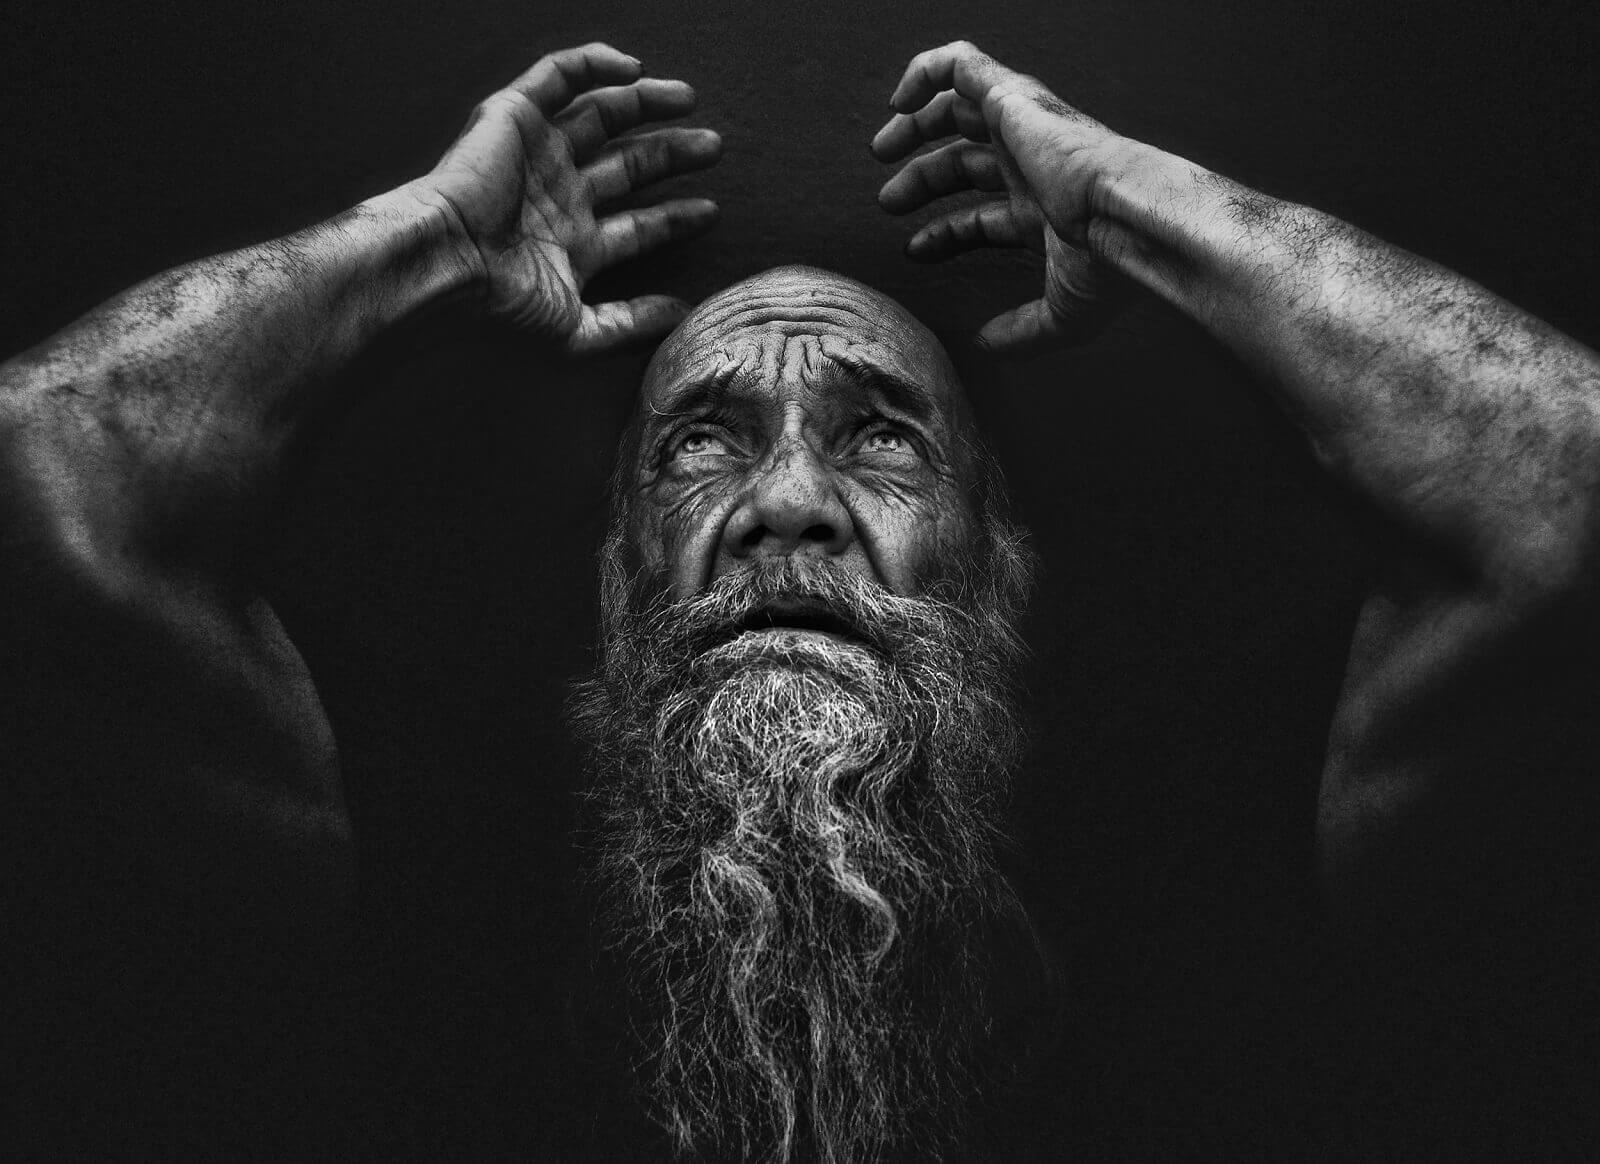 Black and White Portrait Photography — Pro-Tips & Techniques